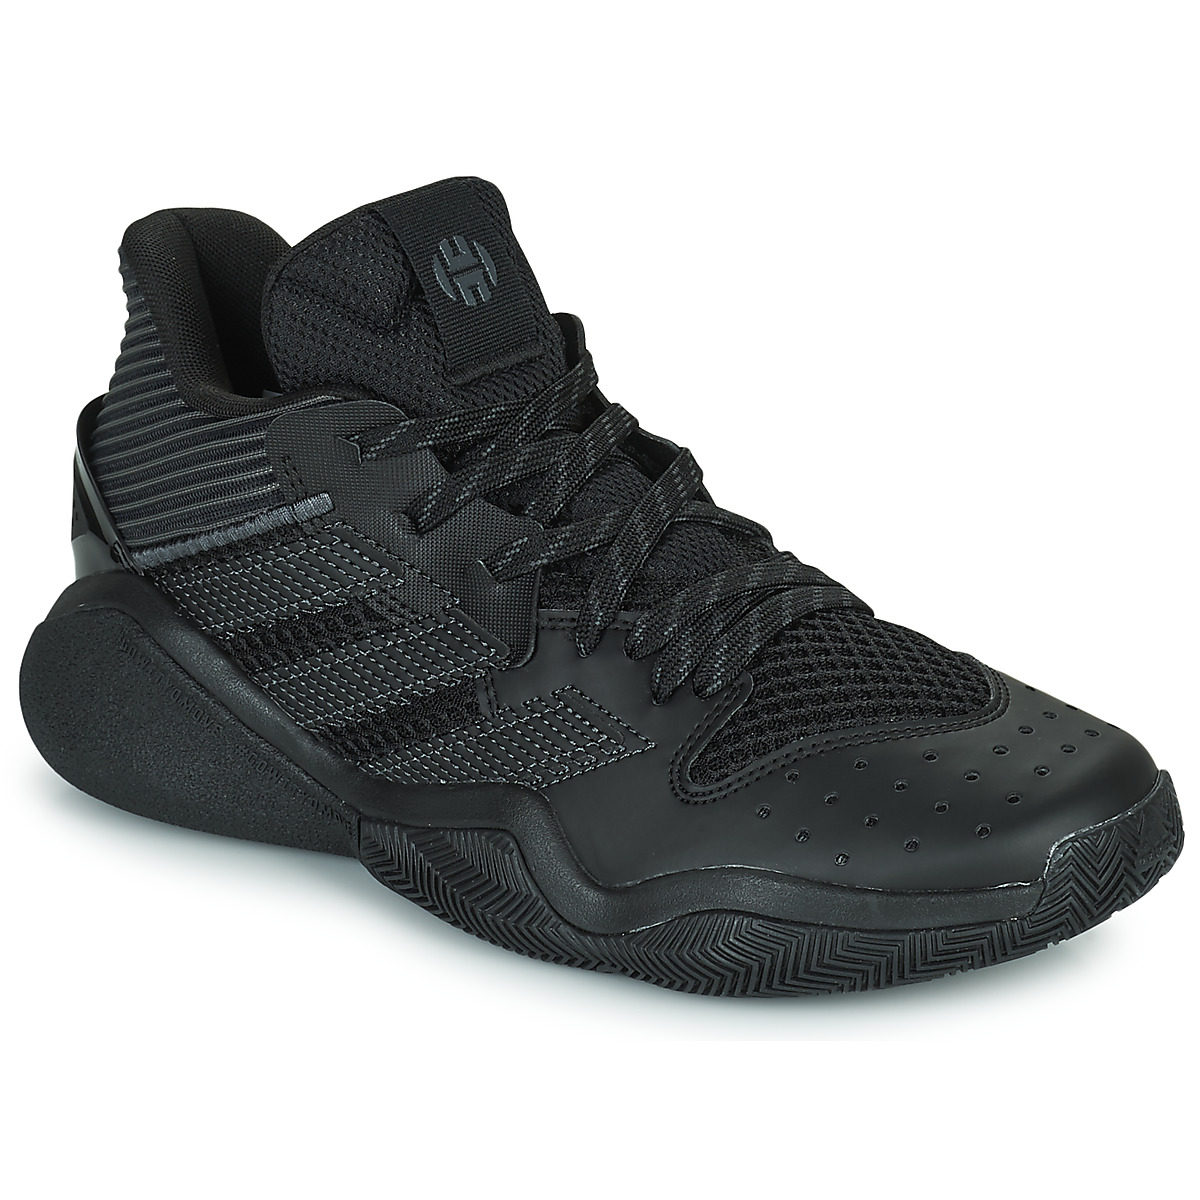 Sko Basketstøvler adidas Performance HARDEN STEPBACK Sort